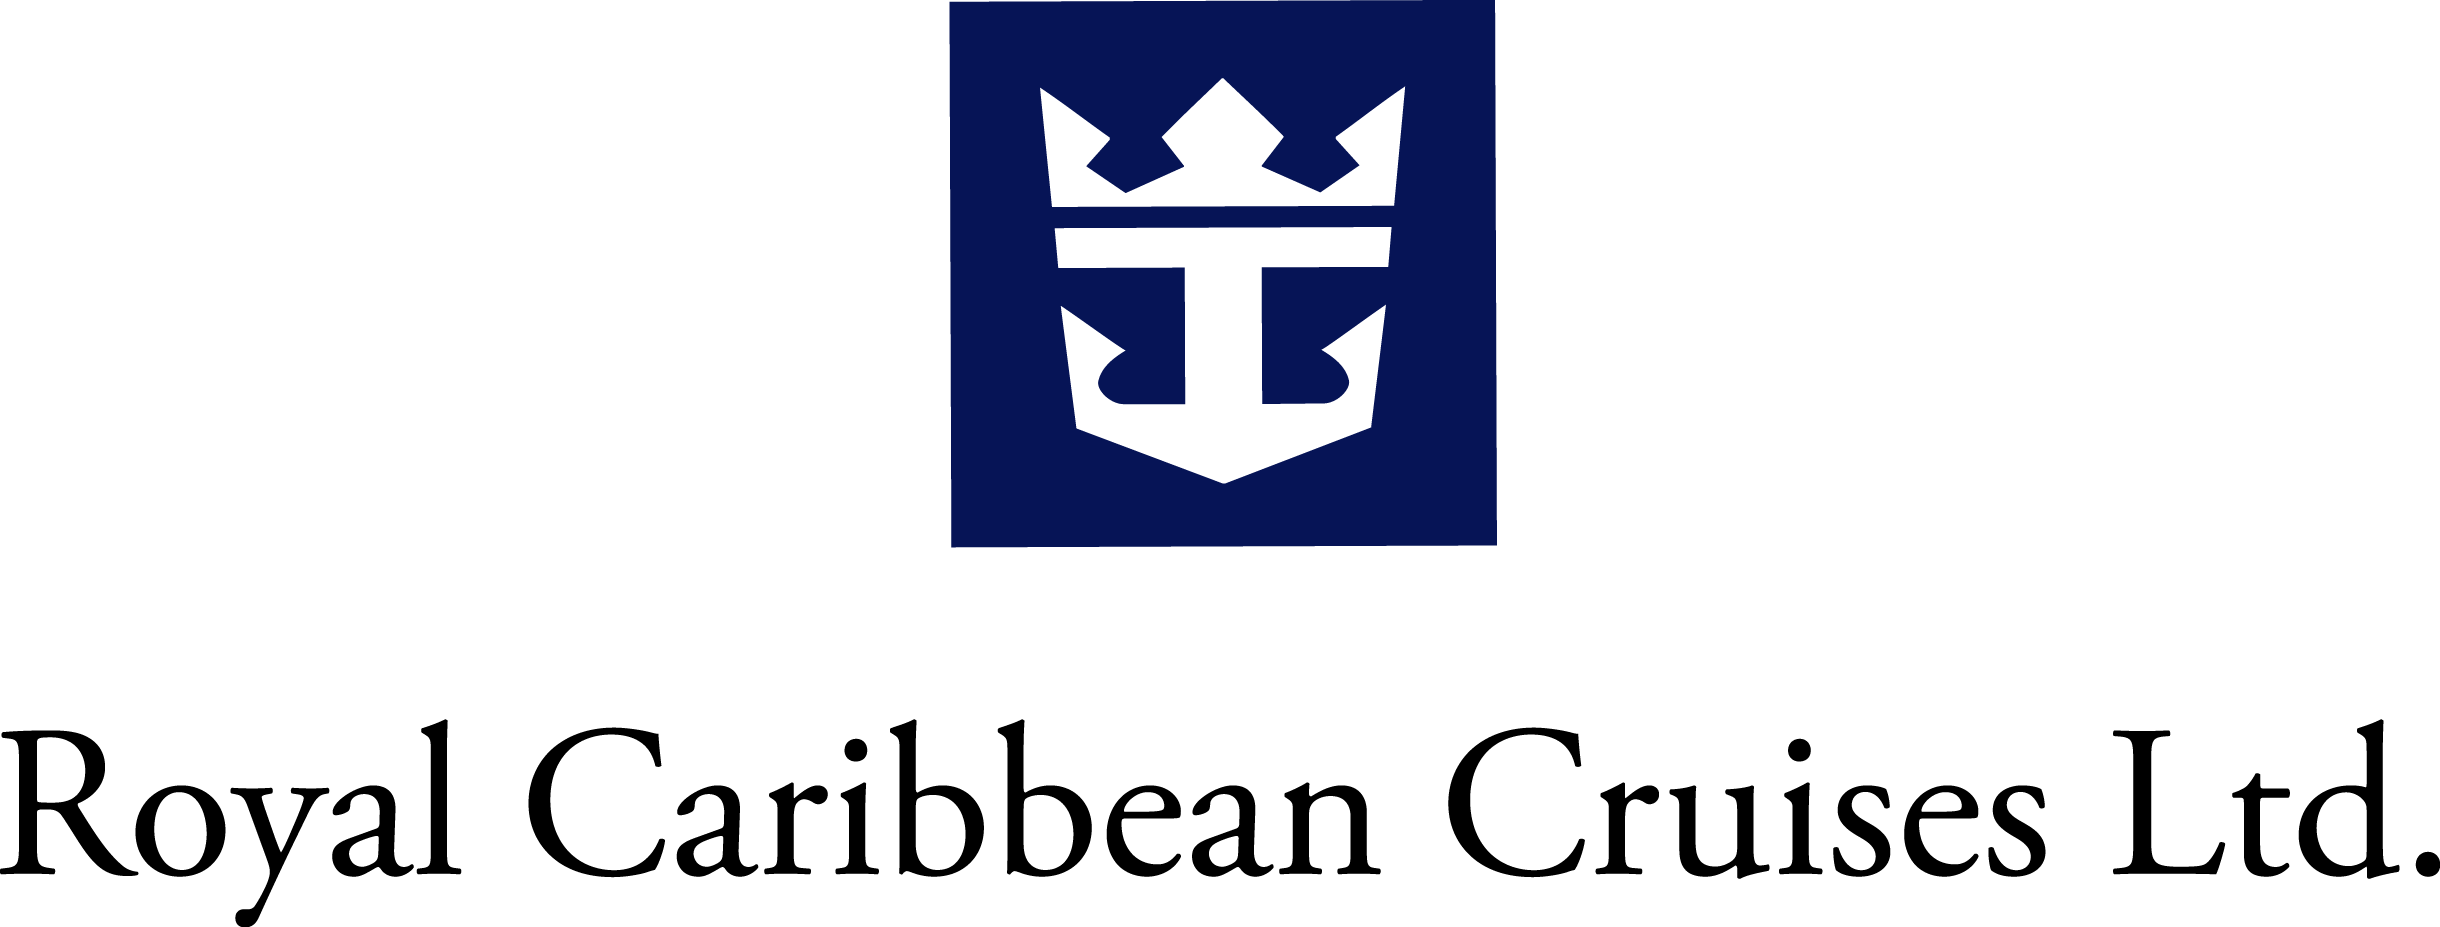 royal caribbean cruises ltd company profile